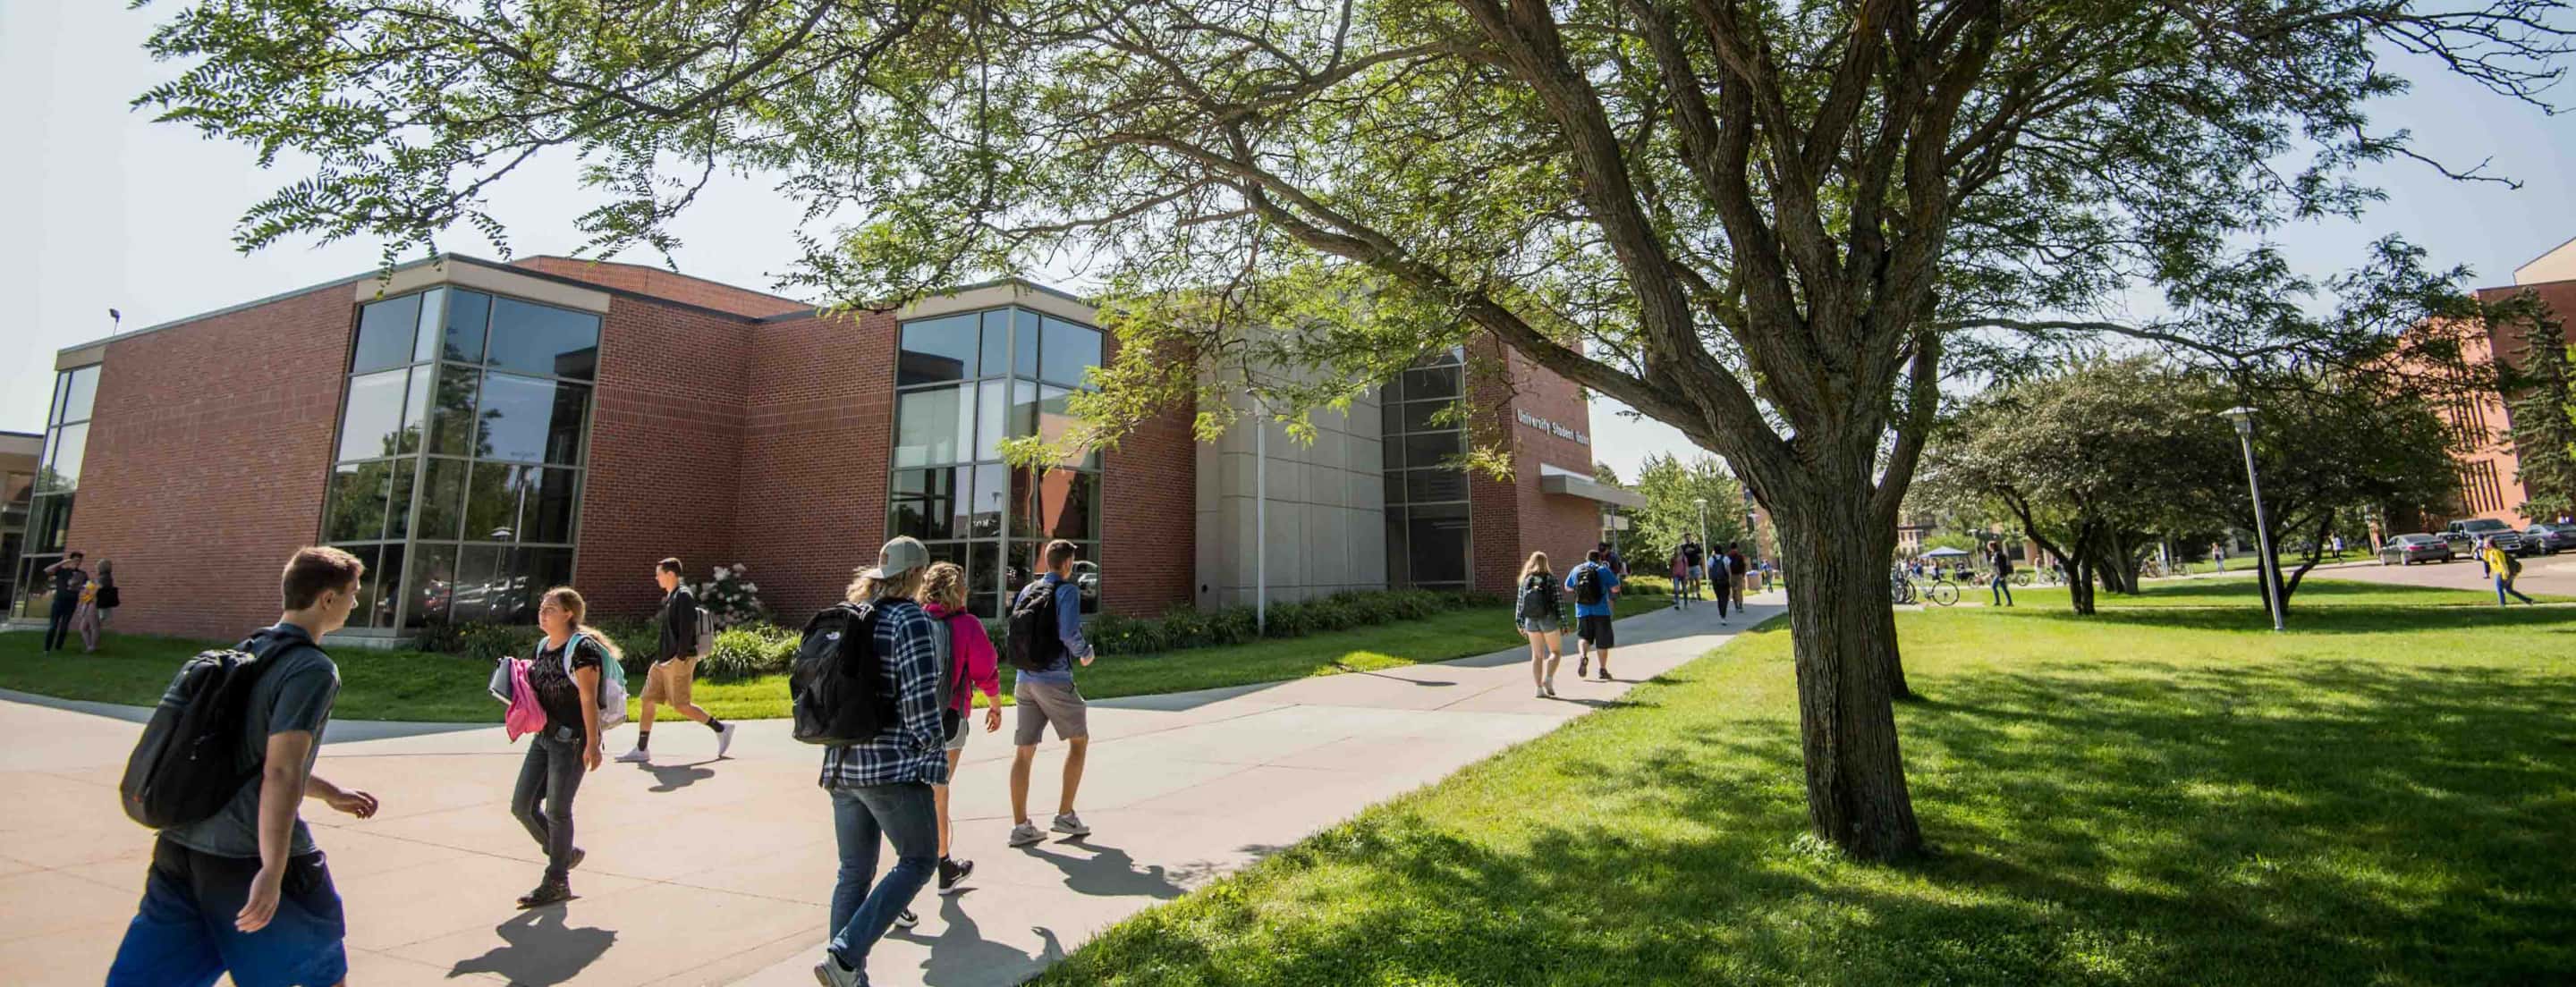 Students walking through the South Dakota State University campus